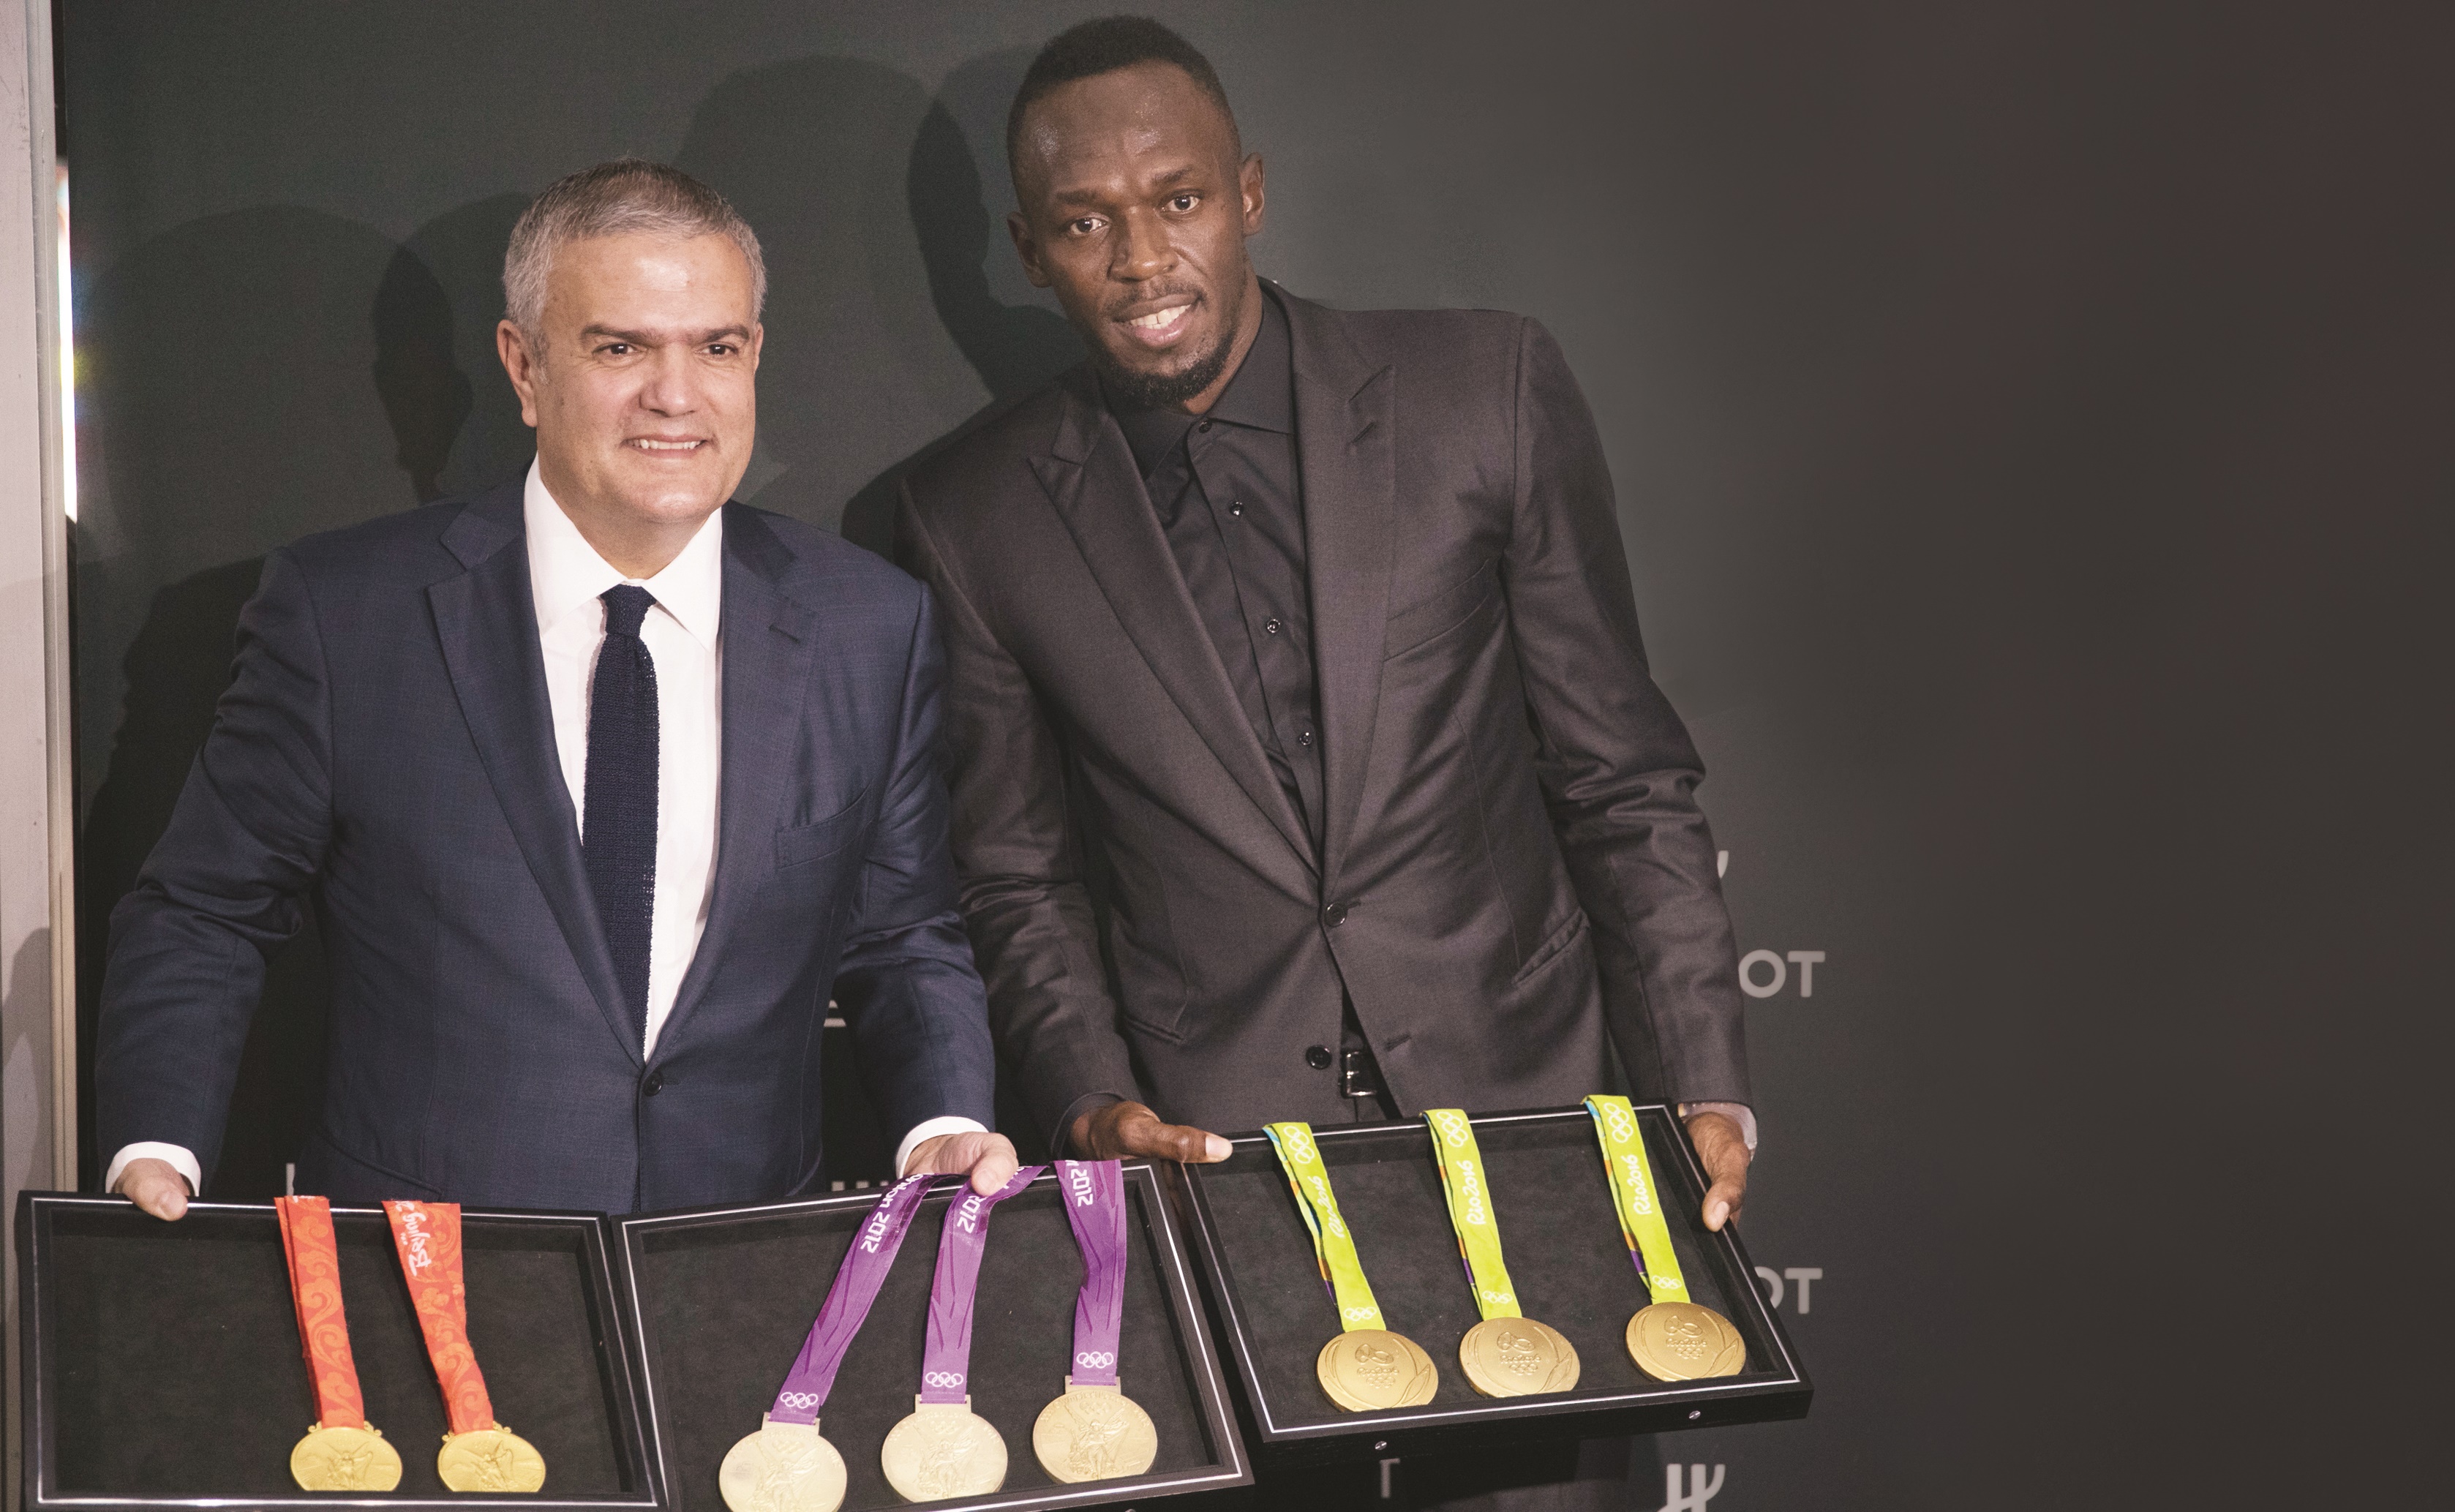 "Me encanta el deporte": Bolt